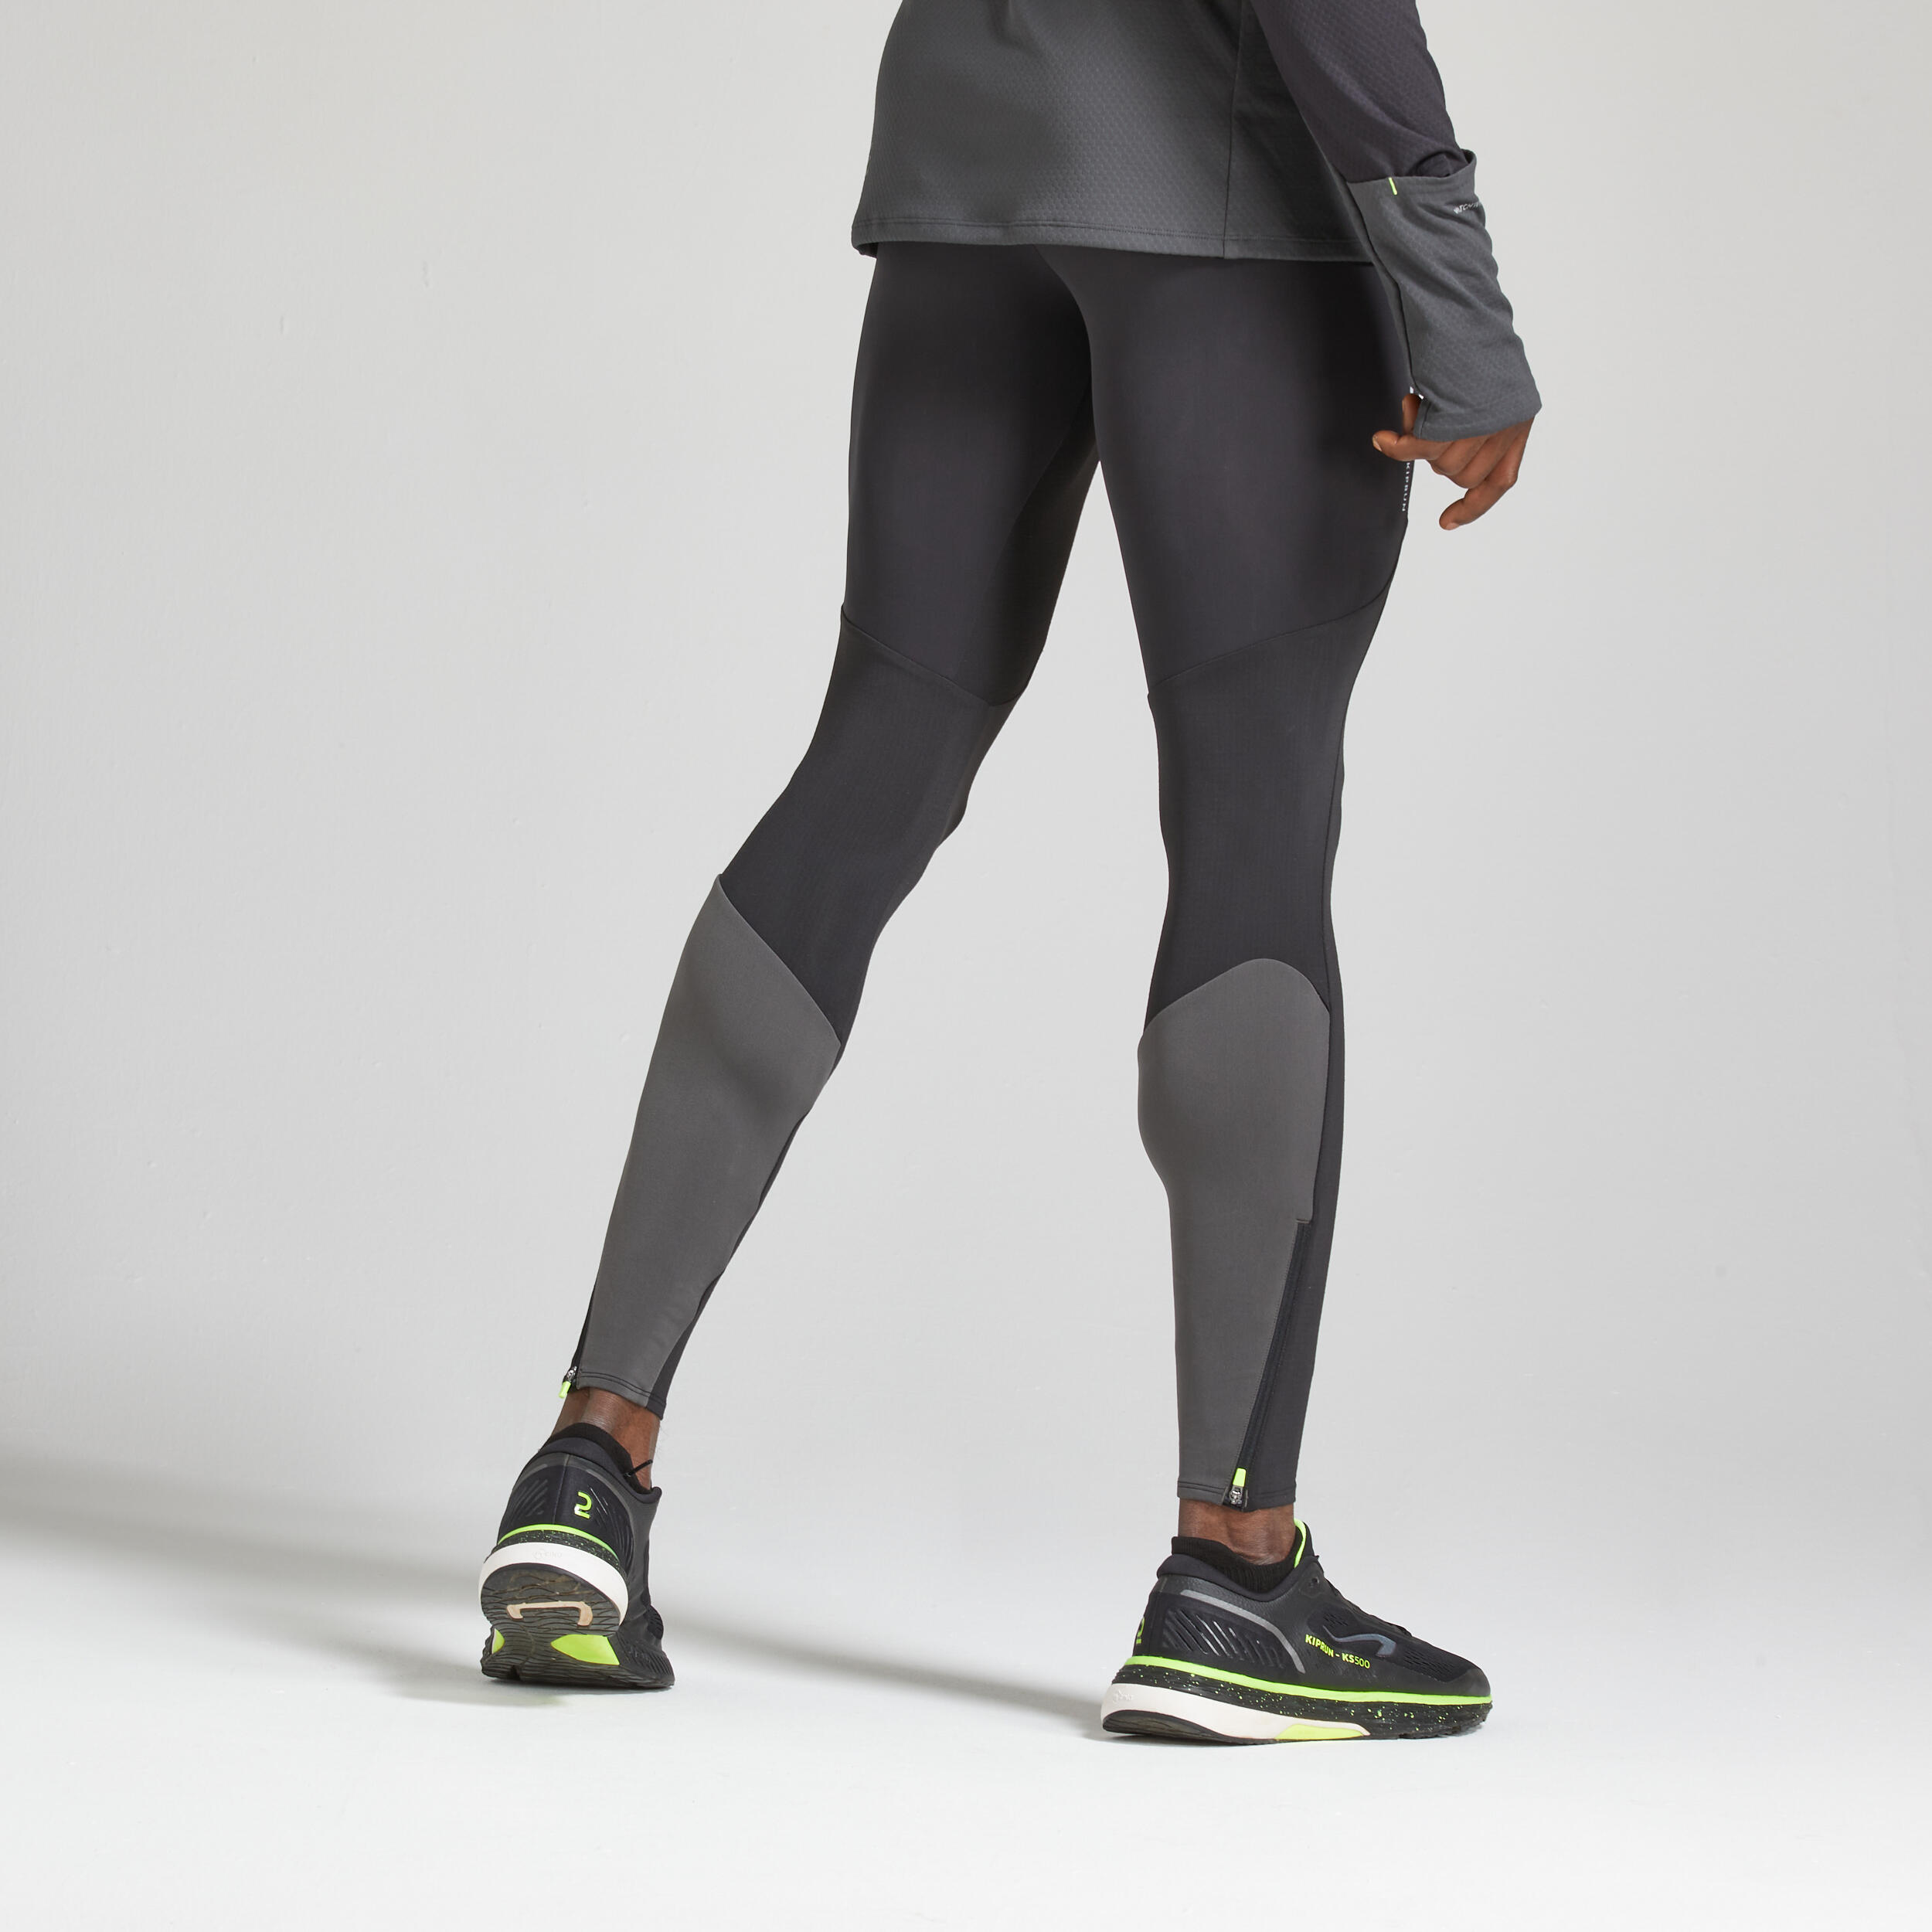 Kiprun Warm Men's Running Tights - Black/Grey 3/10